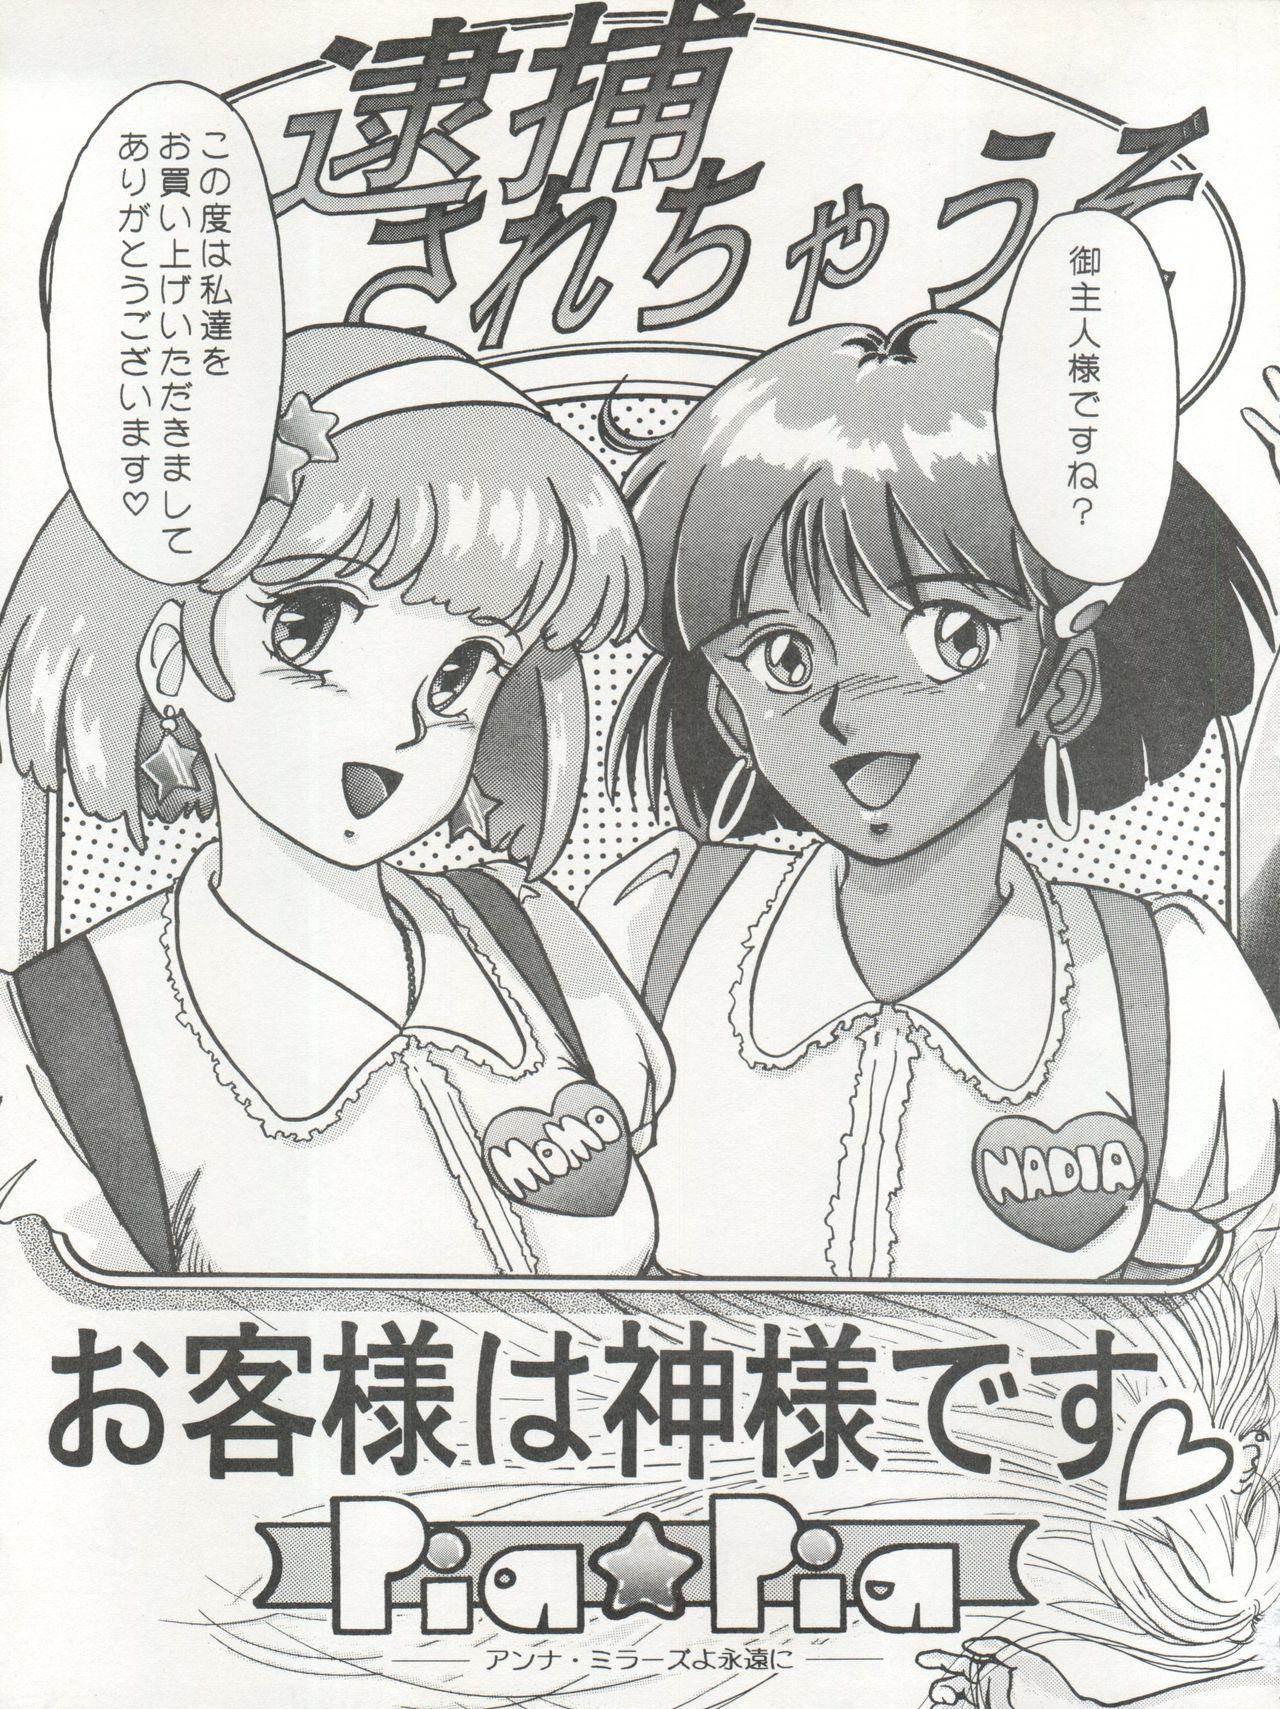 Matures 逮捕されちゃうぞ - Fushigi no umi no nadia Youre under arrest Minky momo 3x3 eyes Bisex - Page 3